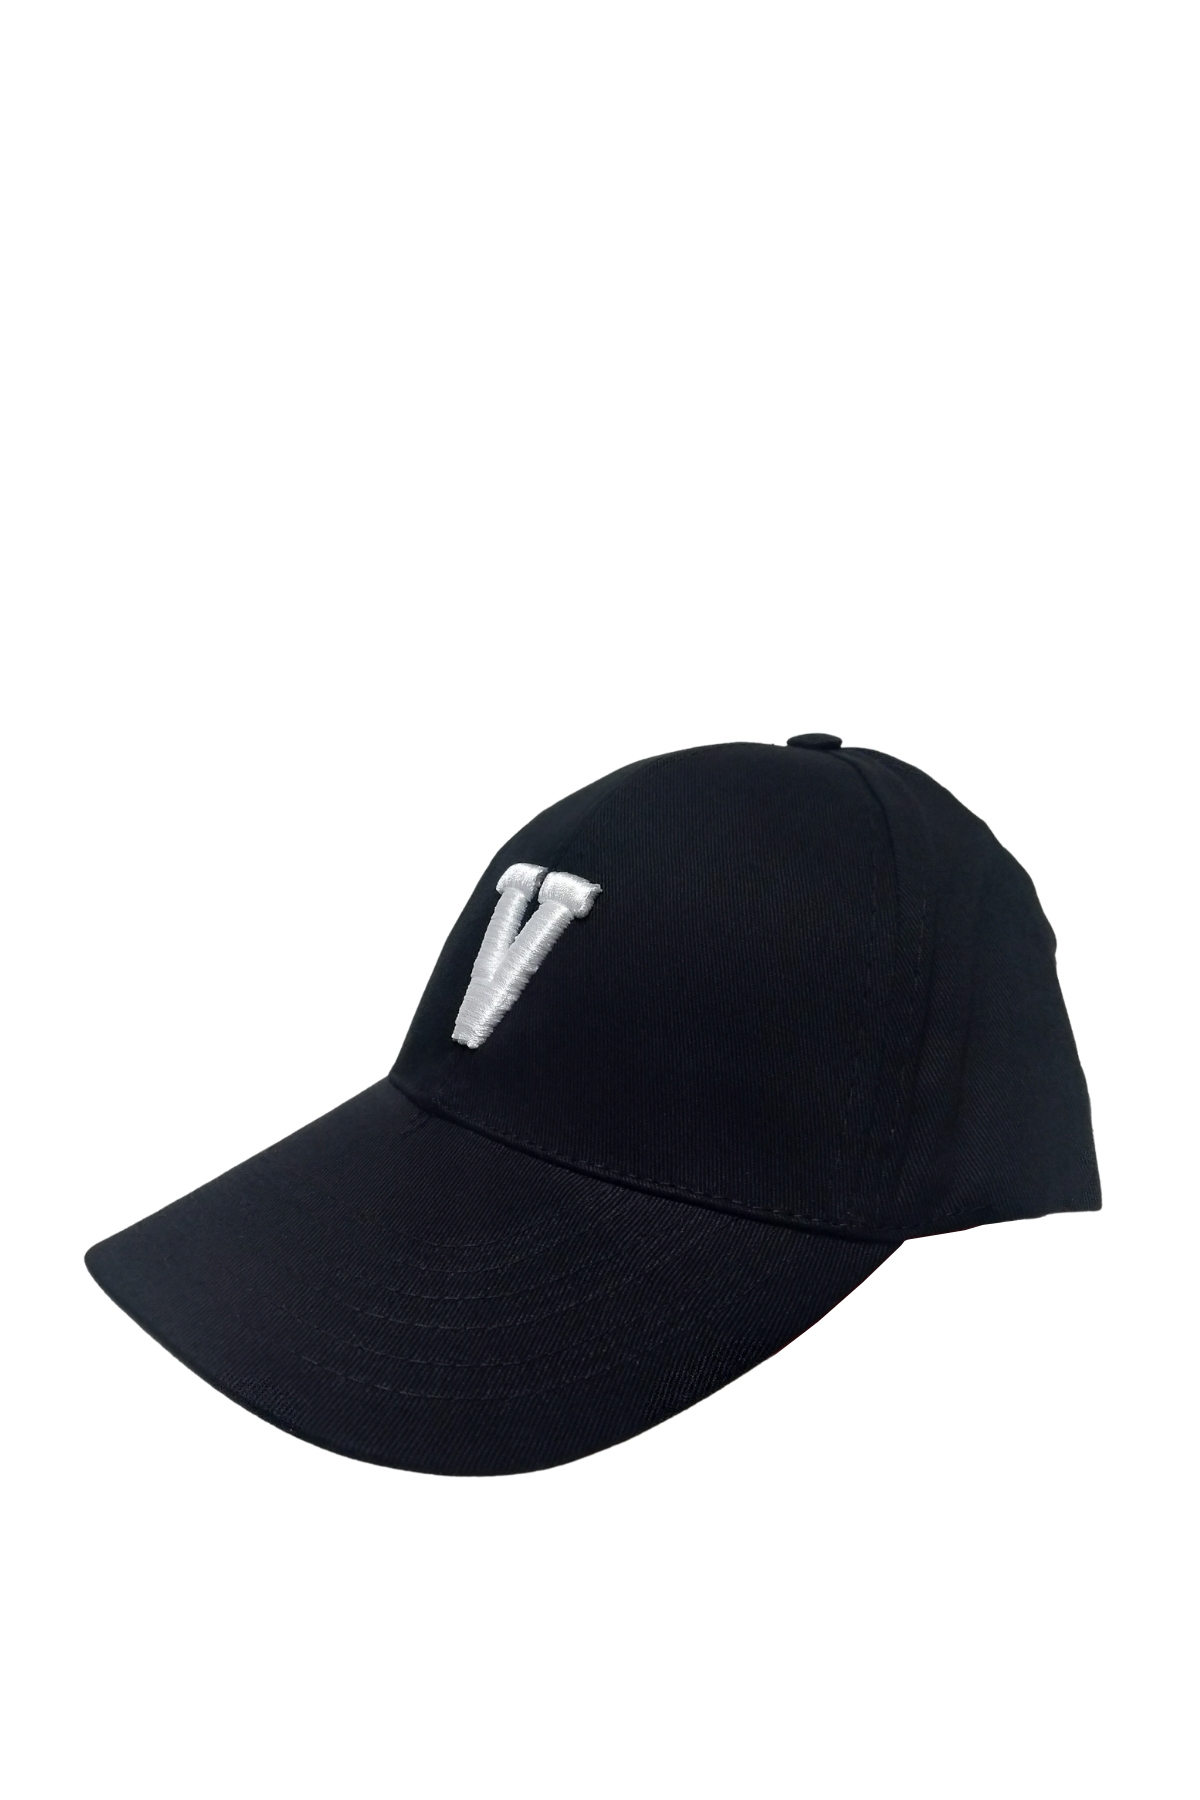 Syt 220 - V Harfli Siyah Şapka